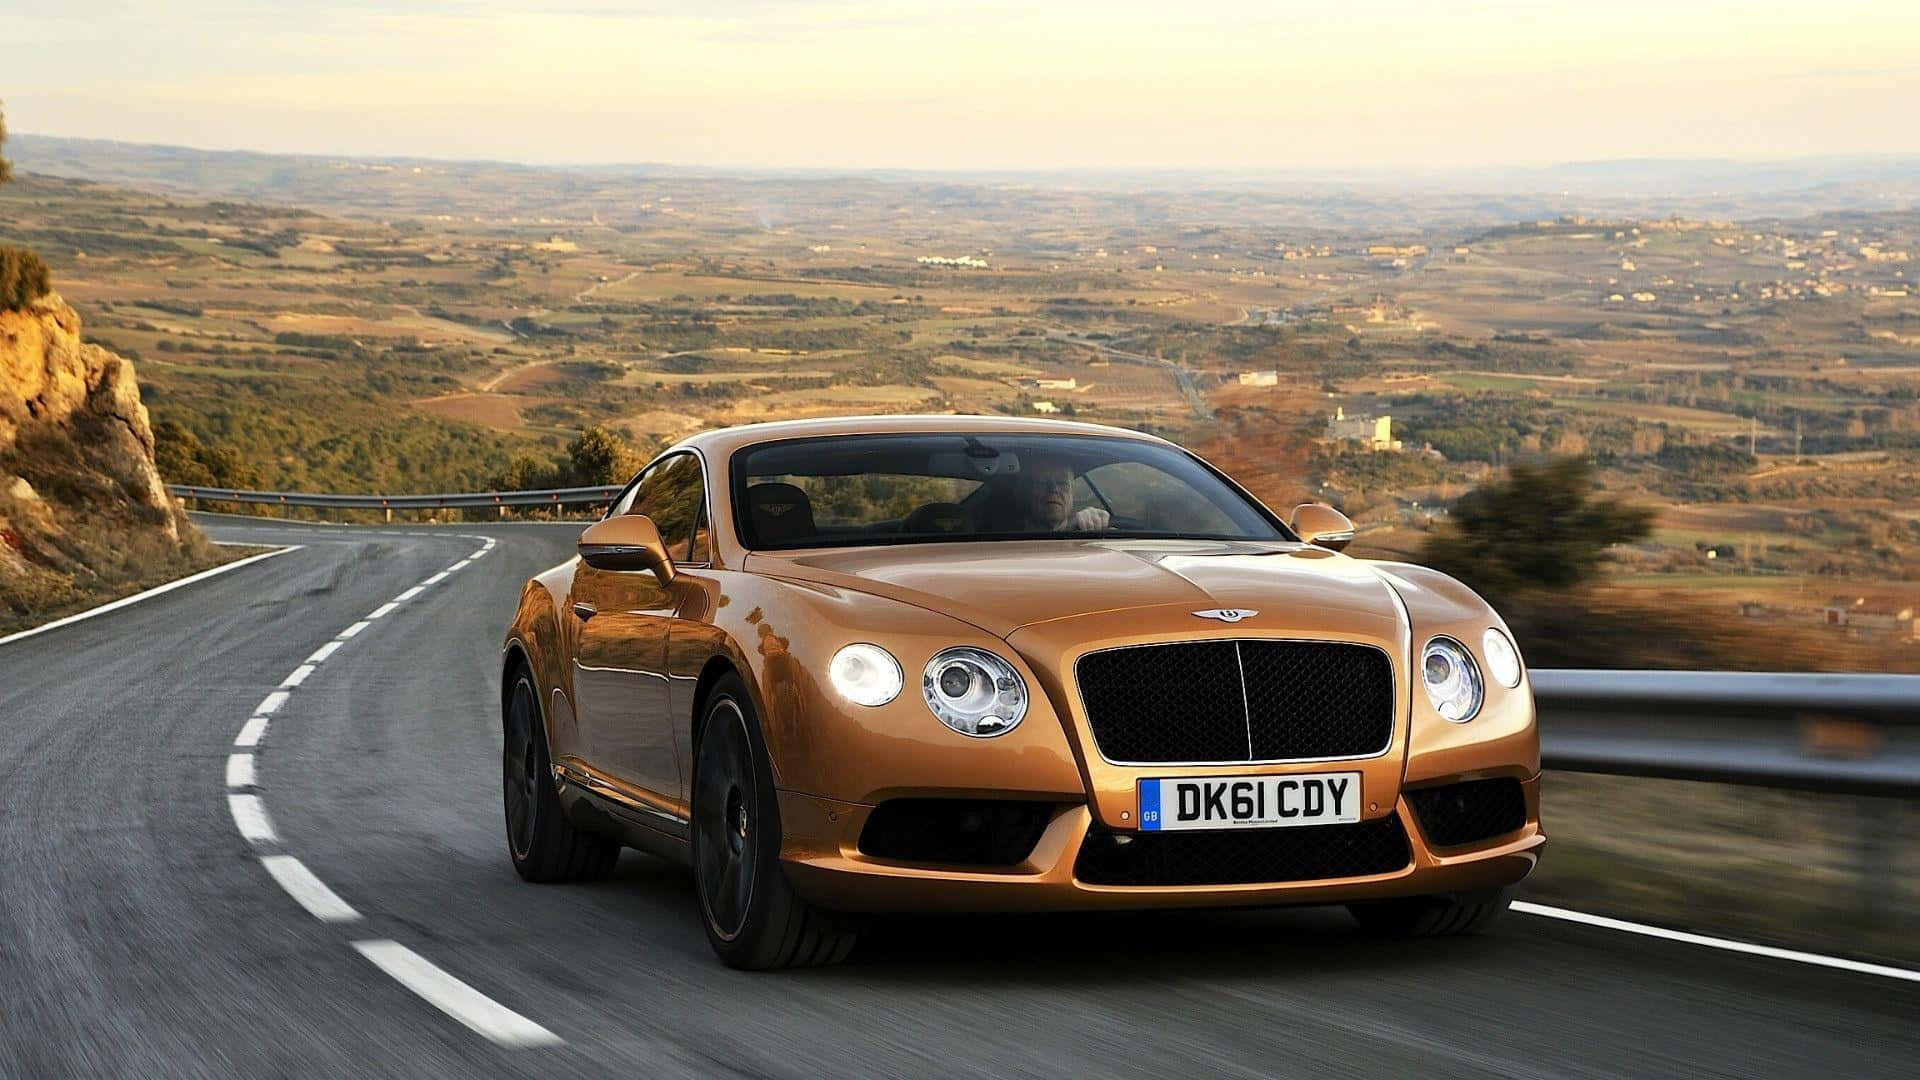 Get behind the wheel of the luxurious Best Bentley